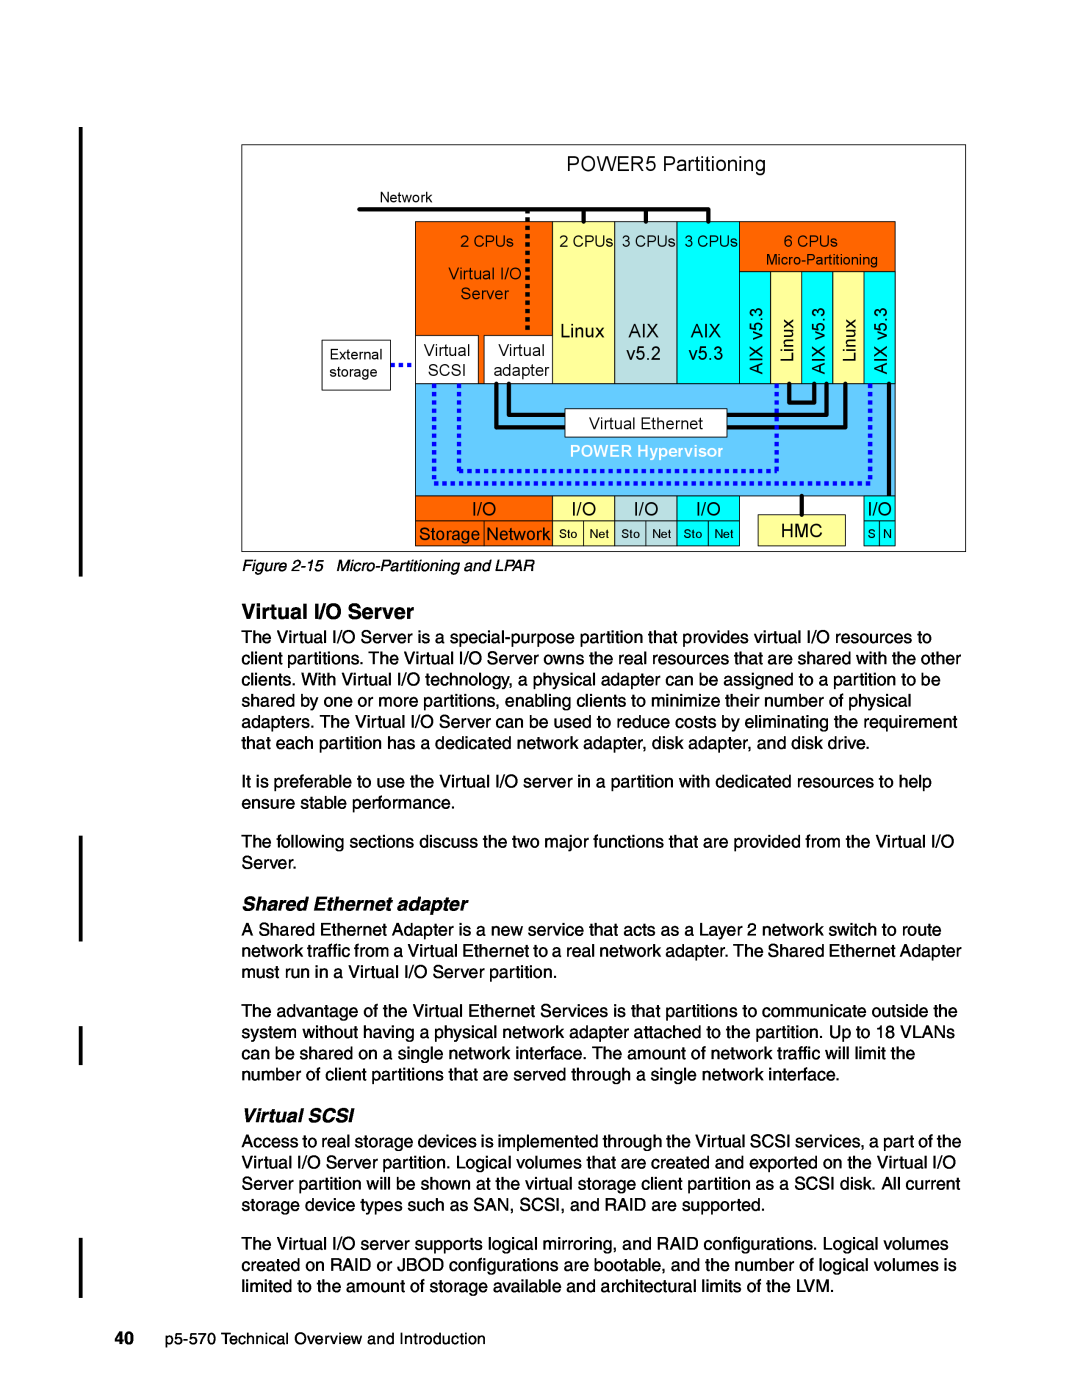 IBM P5 570 manual POWER5 Partitioning, Virtual I/O Server, Shared Ethernet adapter, Virtual SCSI, Linux AIX AIX v5.2 